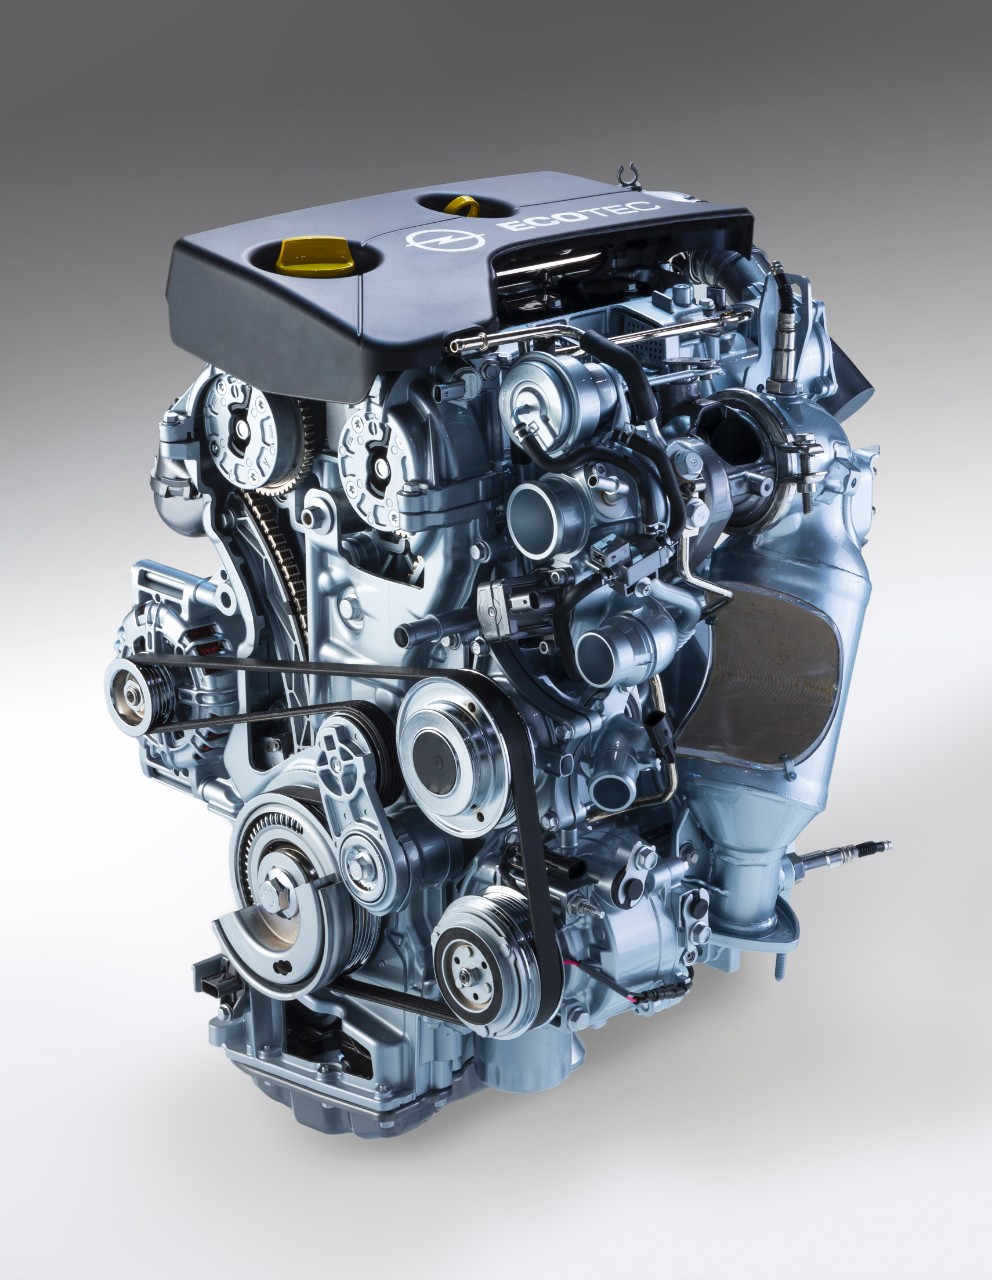 New Ecotec 1.0l Turbo engine